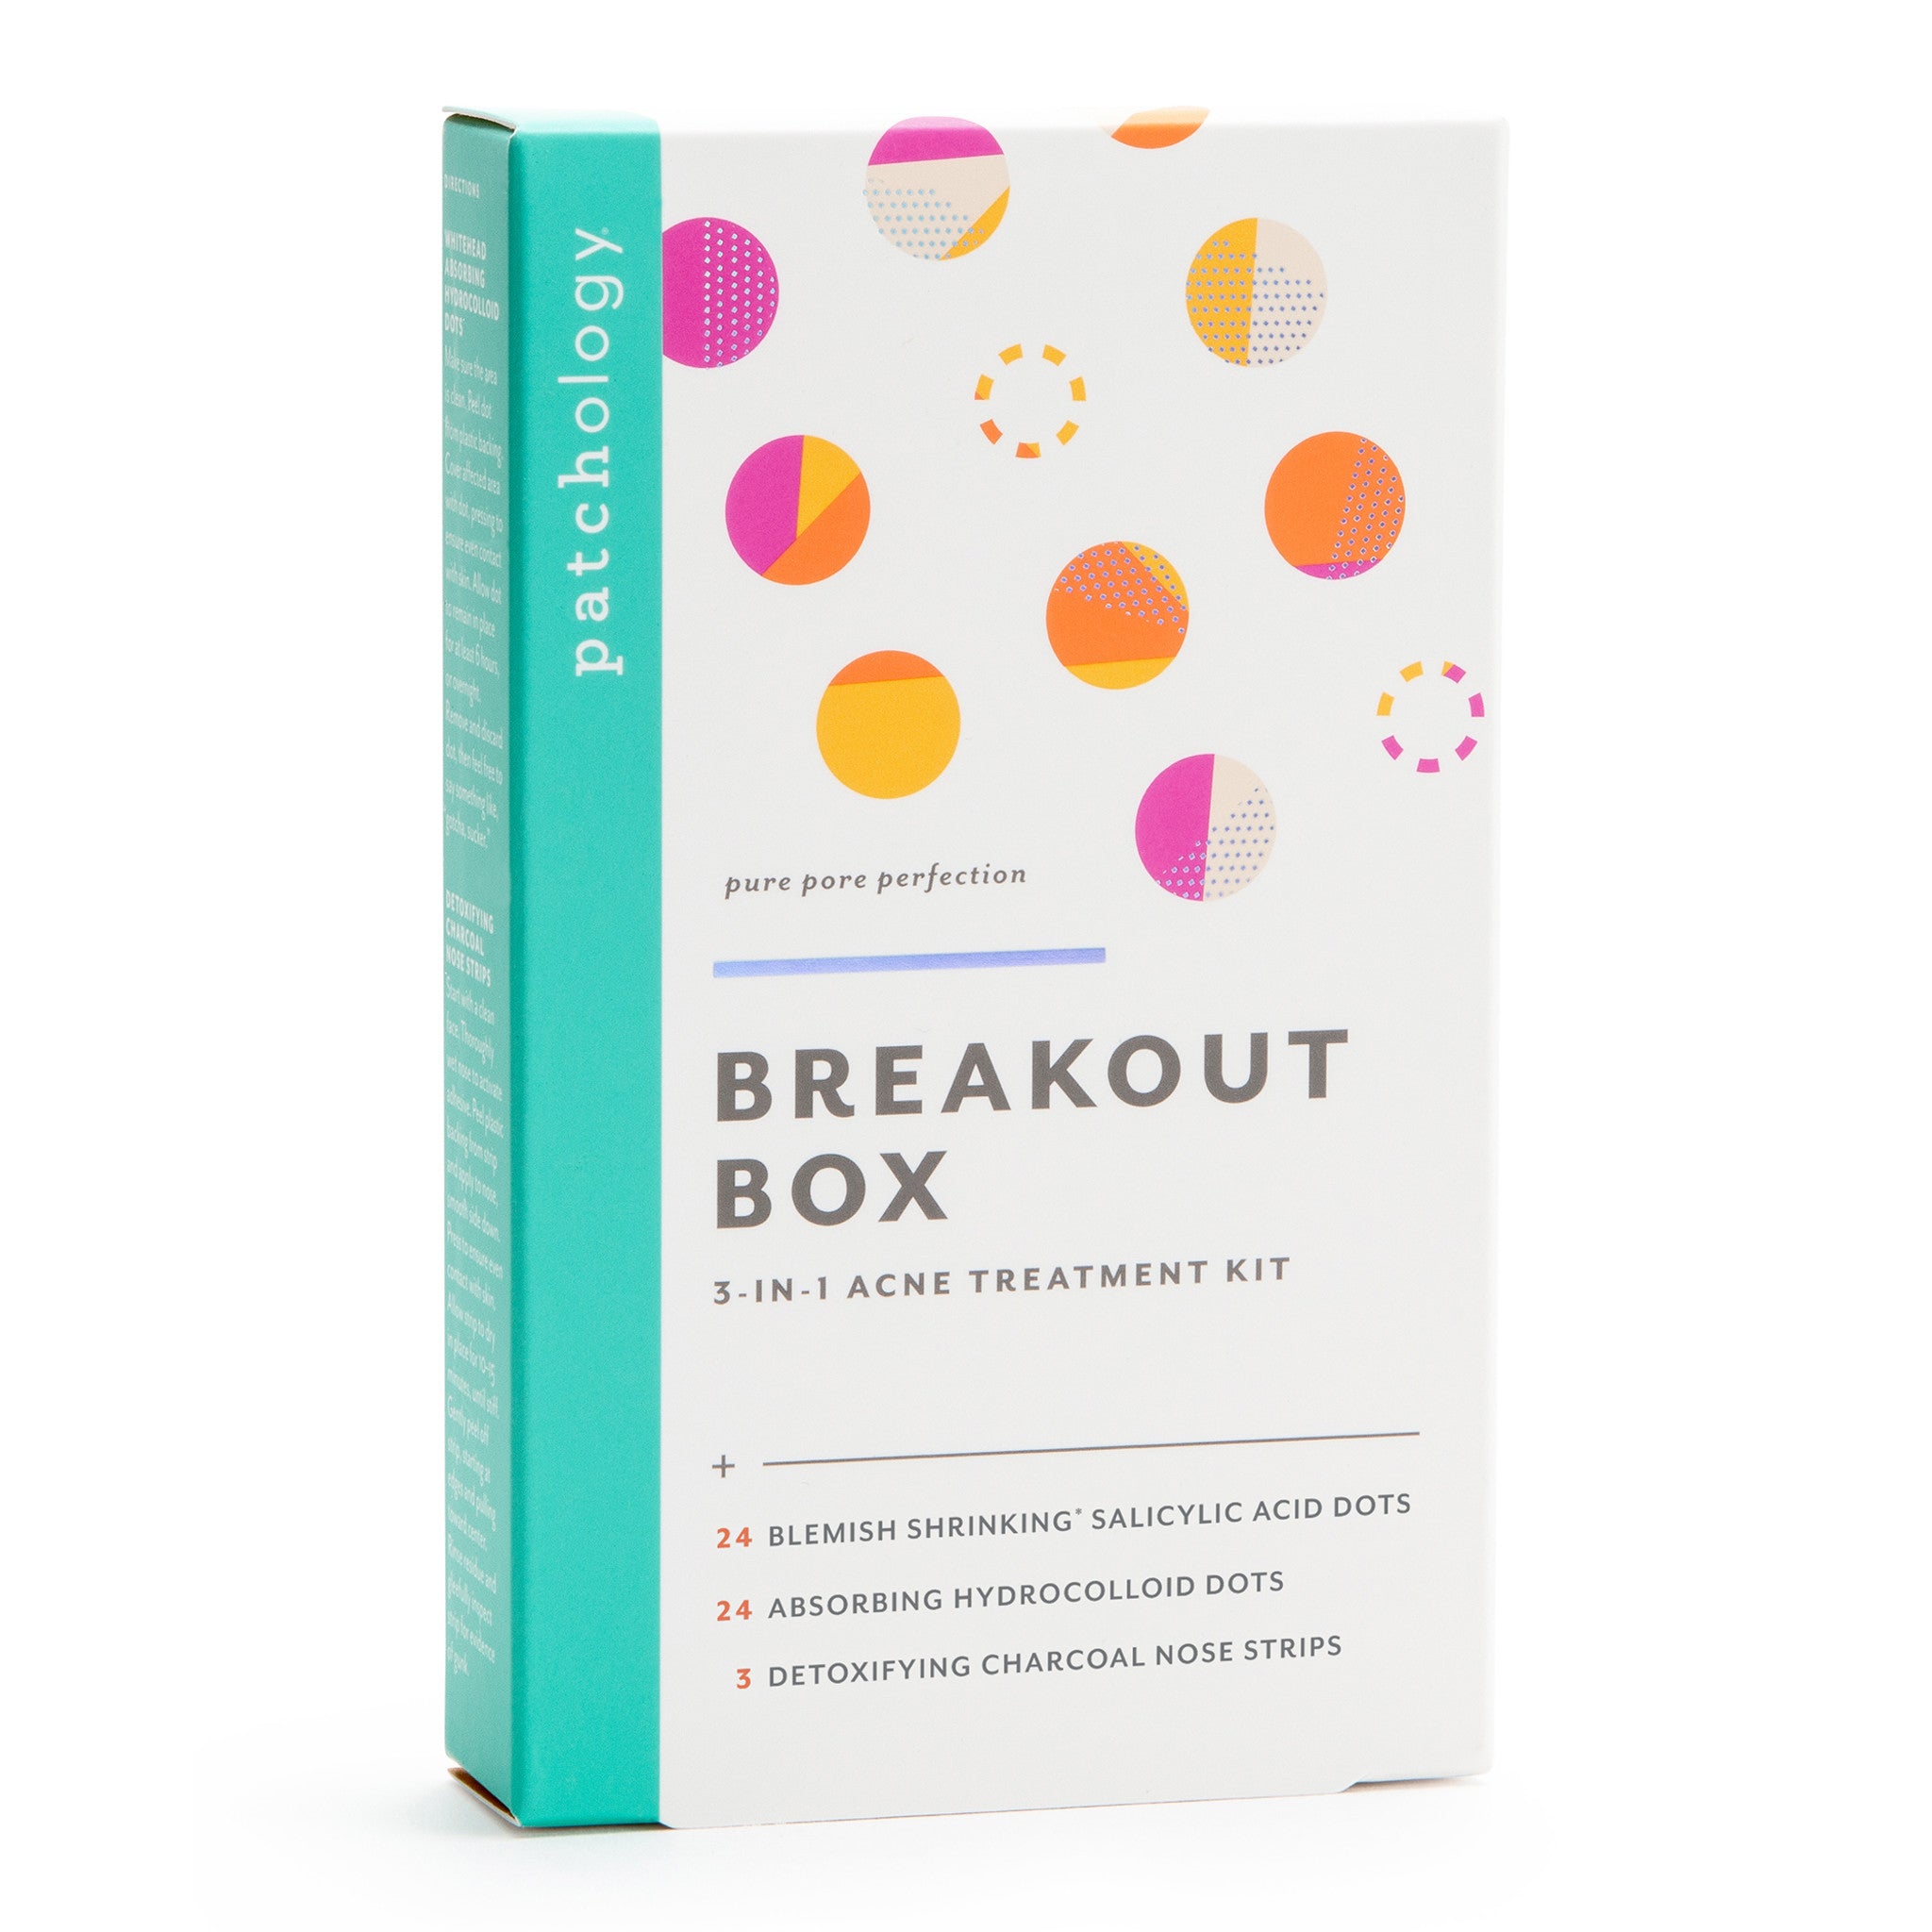 Patchology Breakout Box Acne Treatment Kit main image.